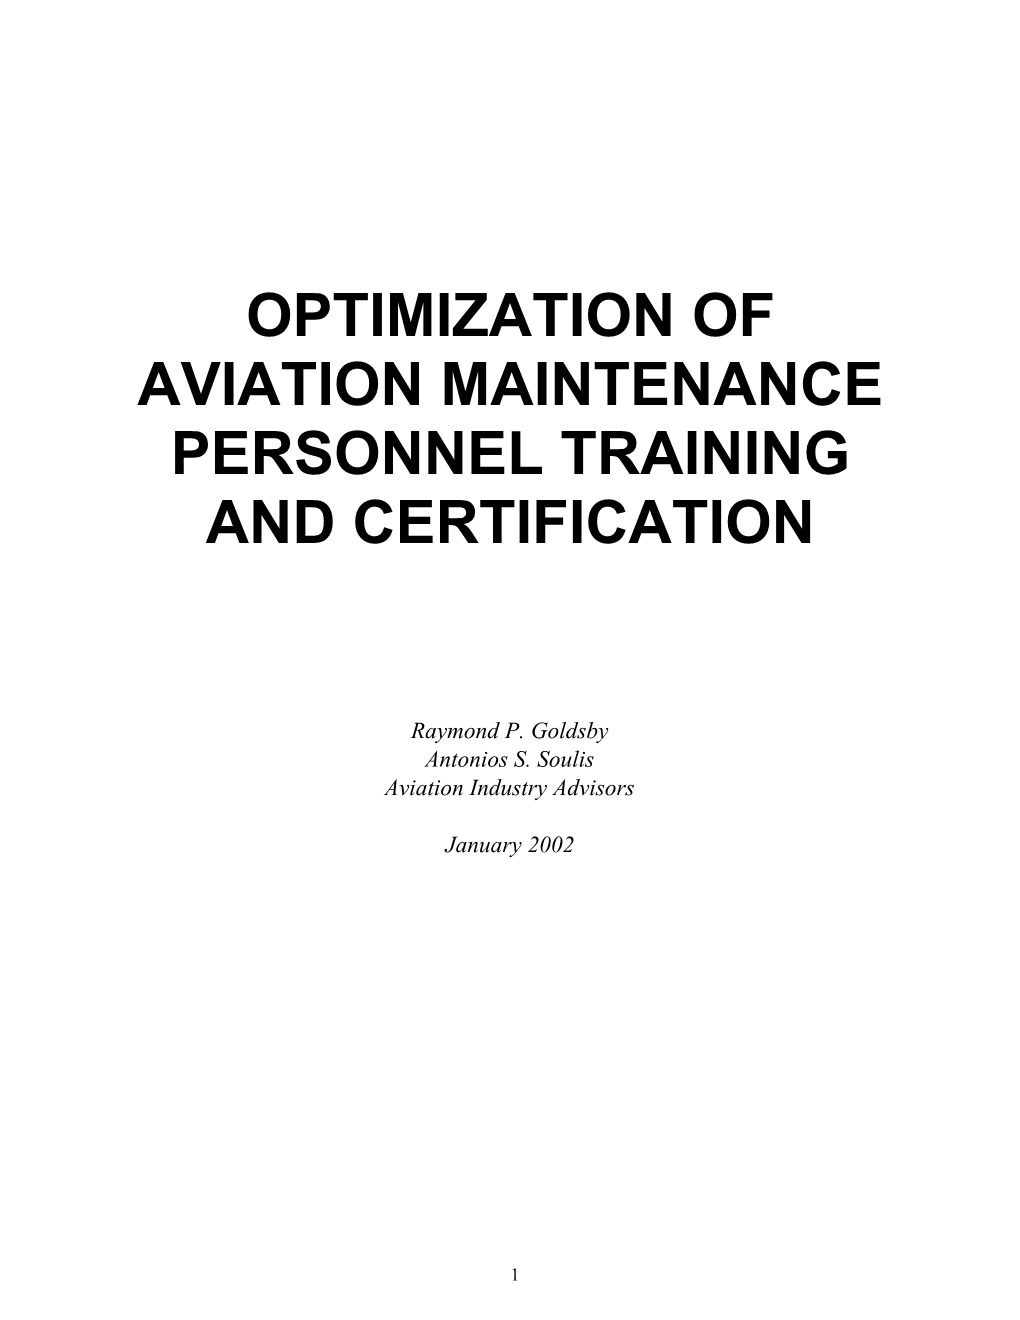 Optimization of Aviation Maintenance Technician Training and Certification